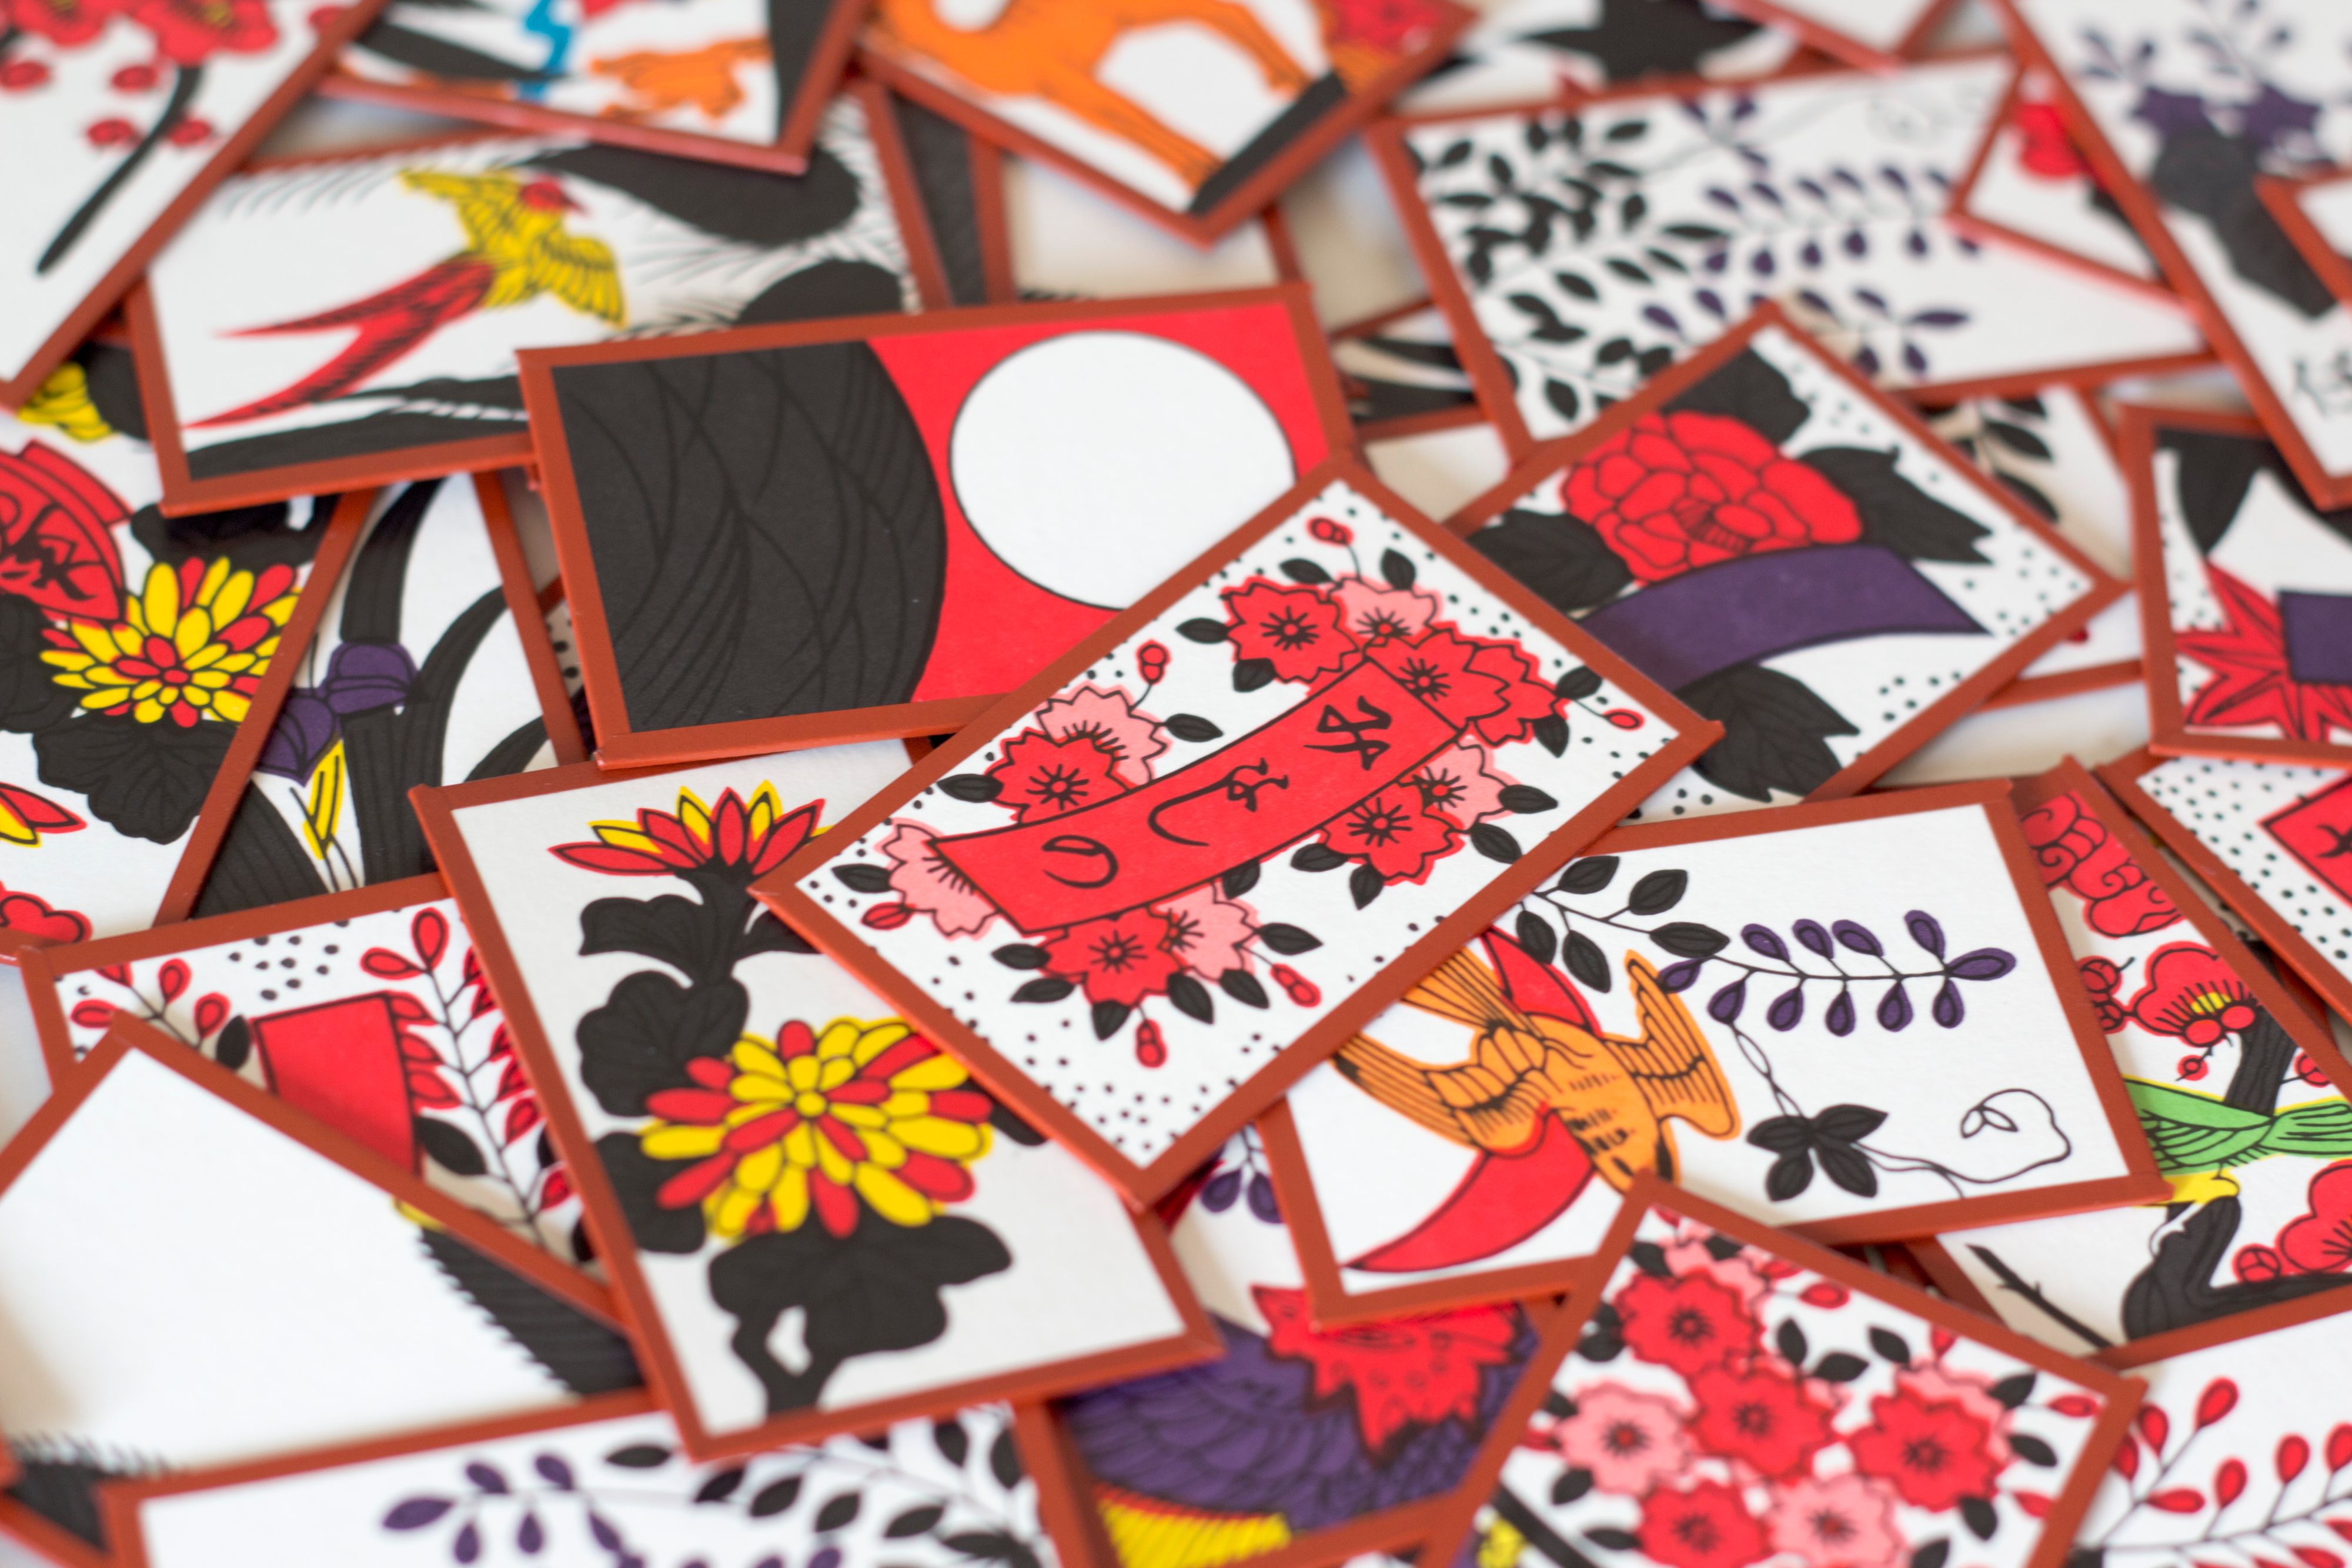 A pile of hanafuda cards.